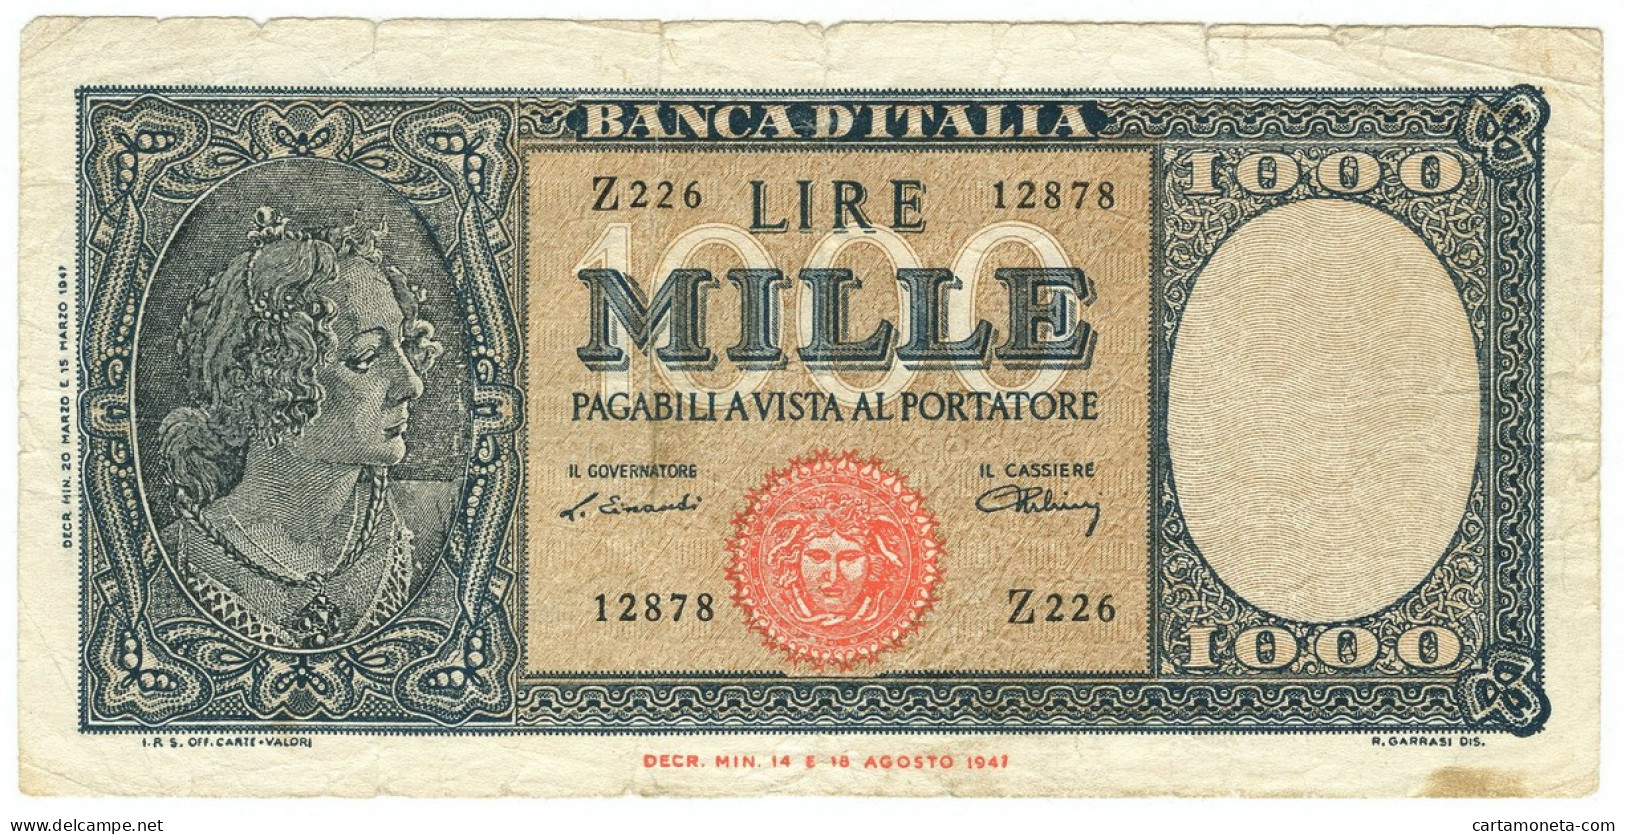 1000 LIRE FALSO D'EPOCA ITALIA ORNATA DI PERLE MEDUSA 20/03/1947 MB/BB - [ 8] Fakes & Specimens